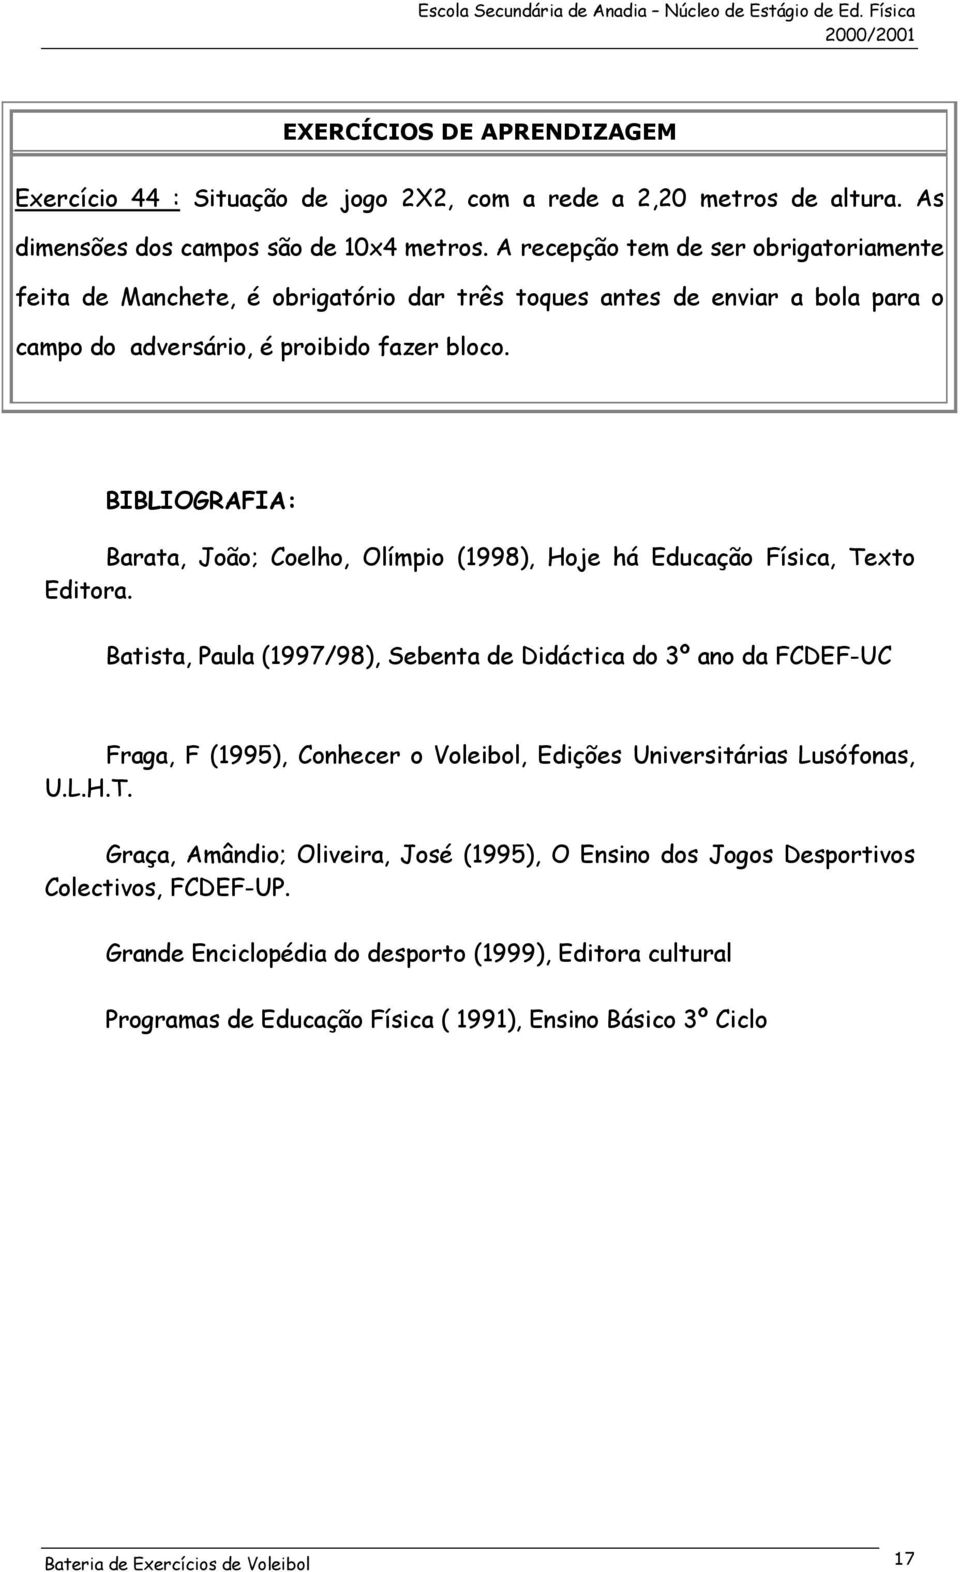 BIBLIOGRAFIA: Barata, João; Coelho, Olímpio (1998), Hoje há Educação Física, Texto Editora.